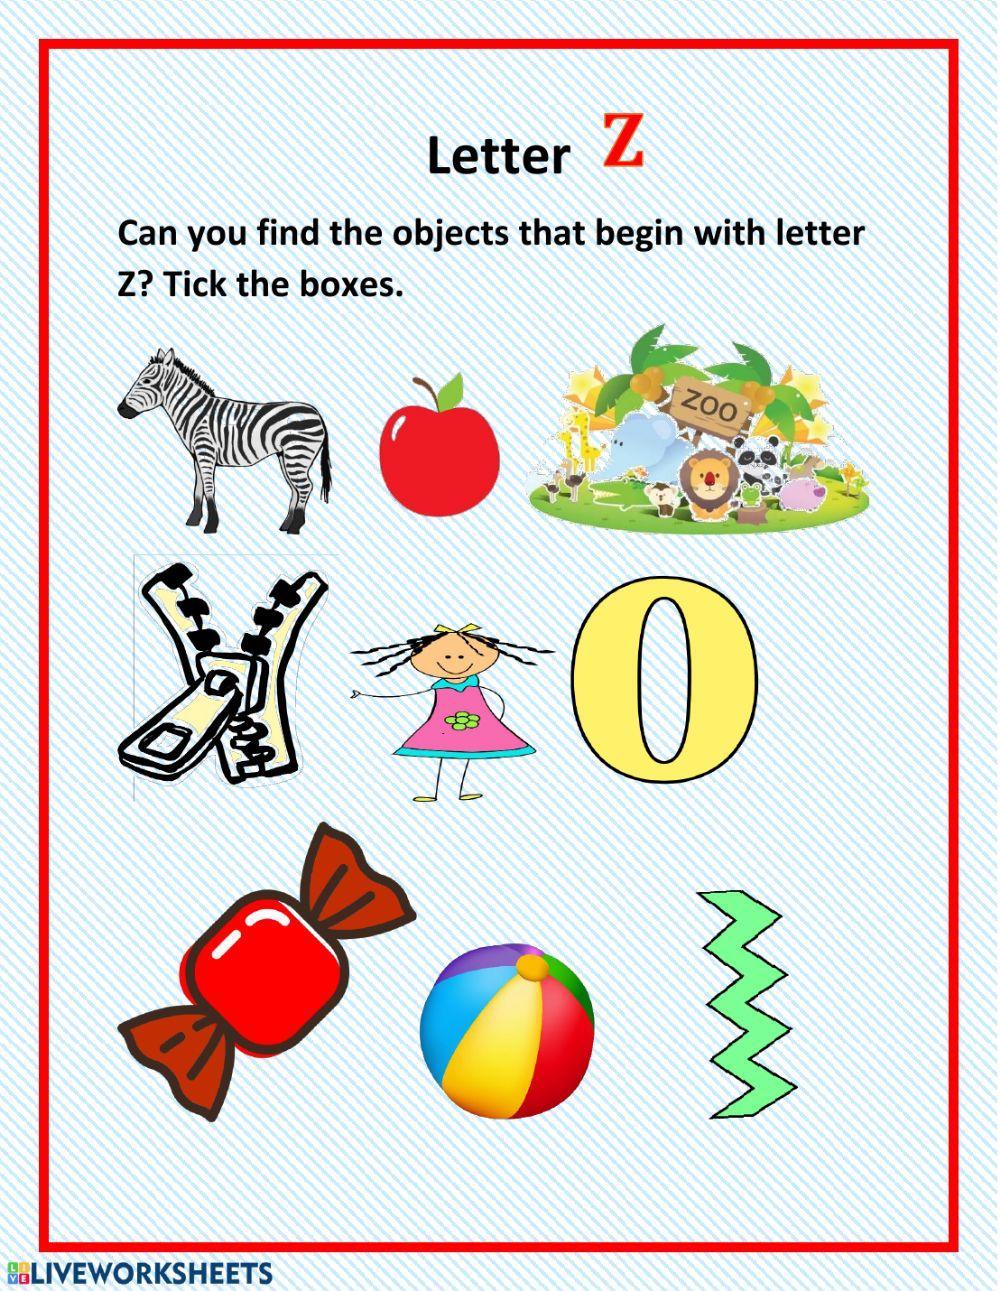 Letter Z activity